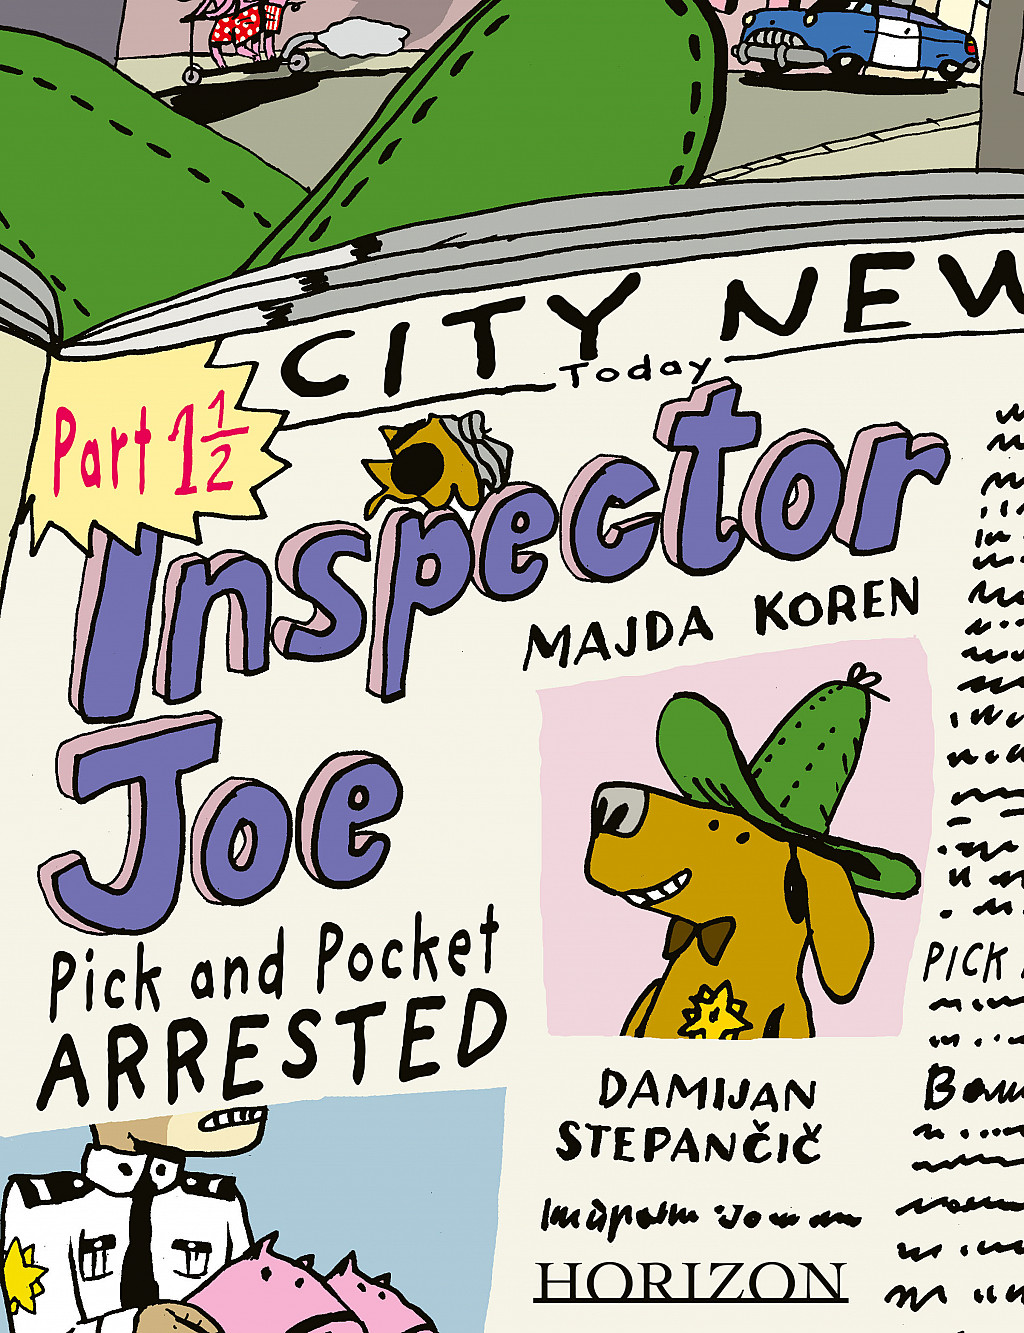 Inspector Joe (English)